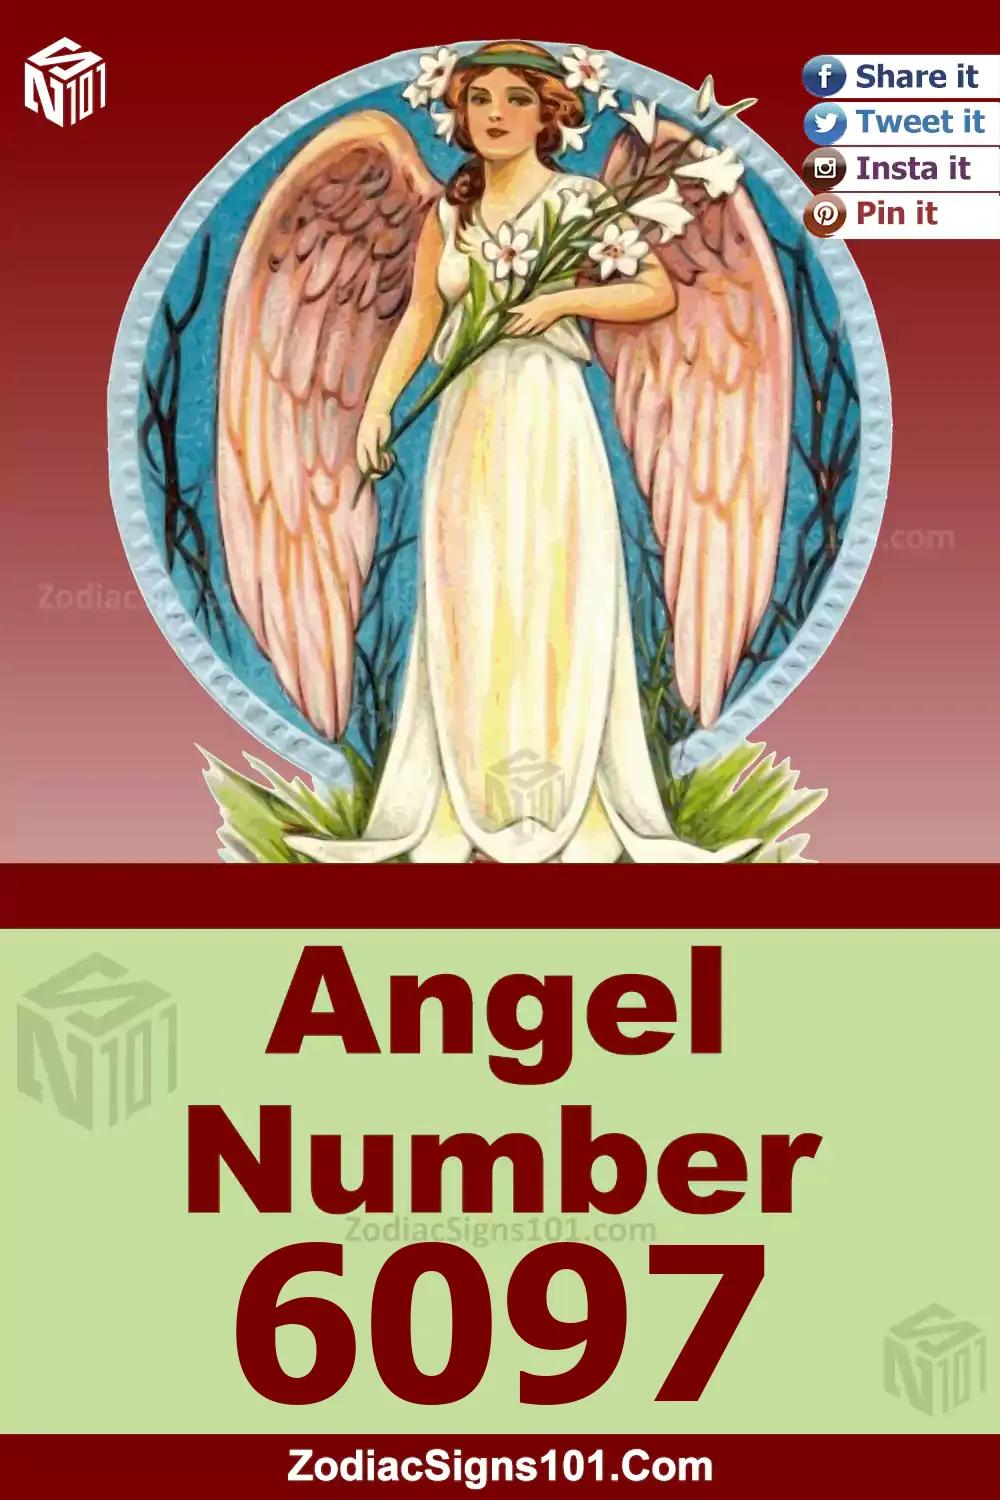 6097-Angel-Number-Meaning.jpg